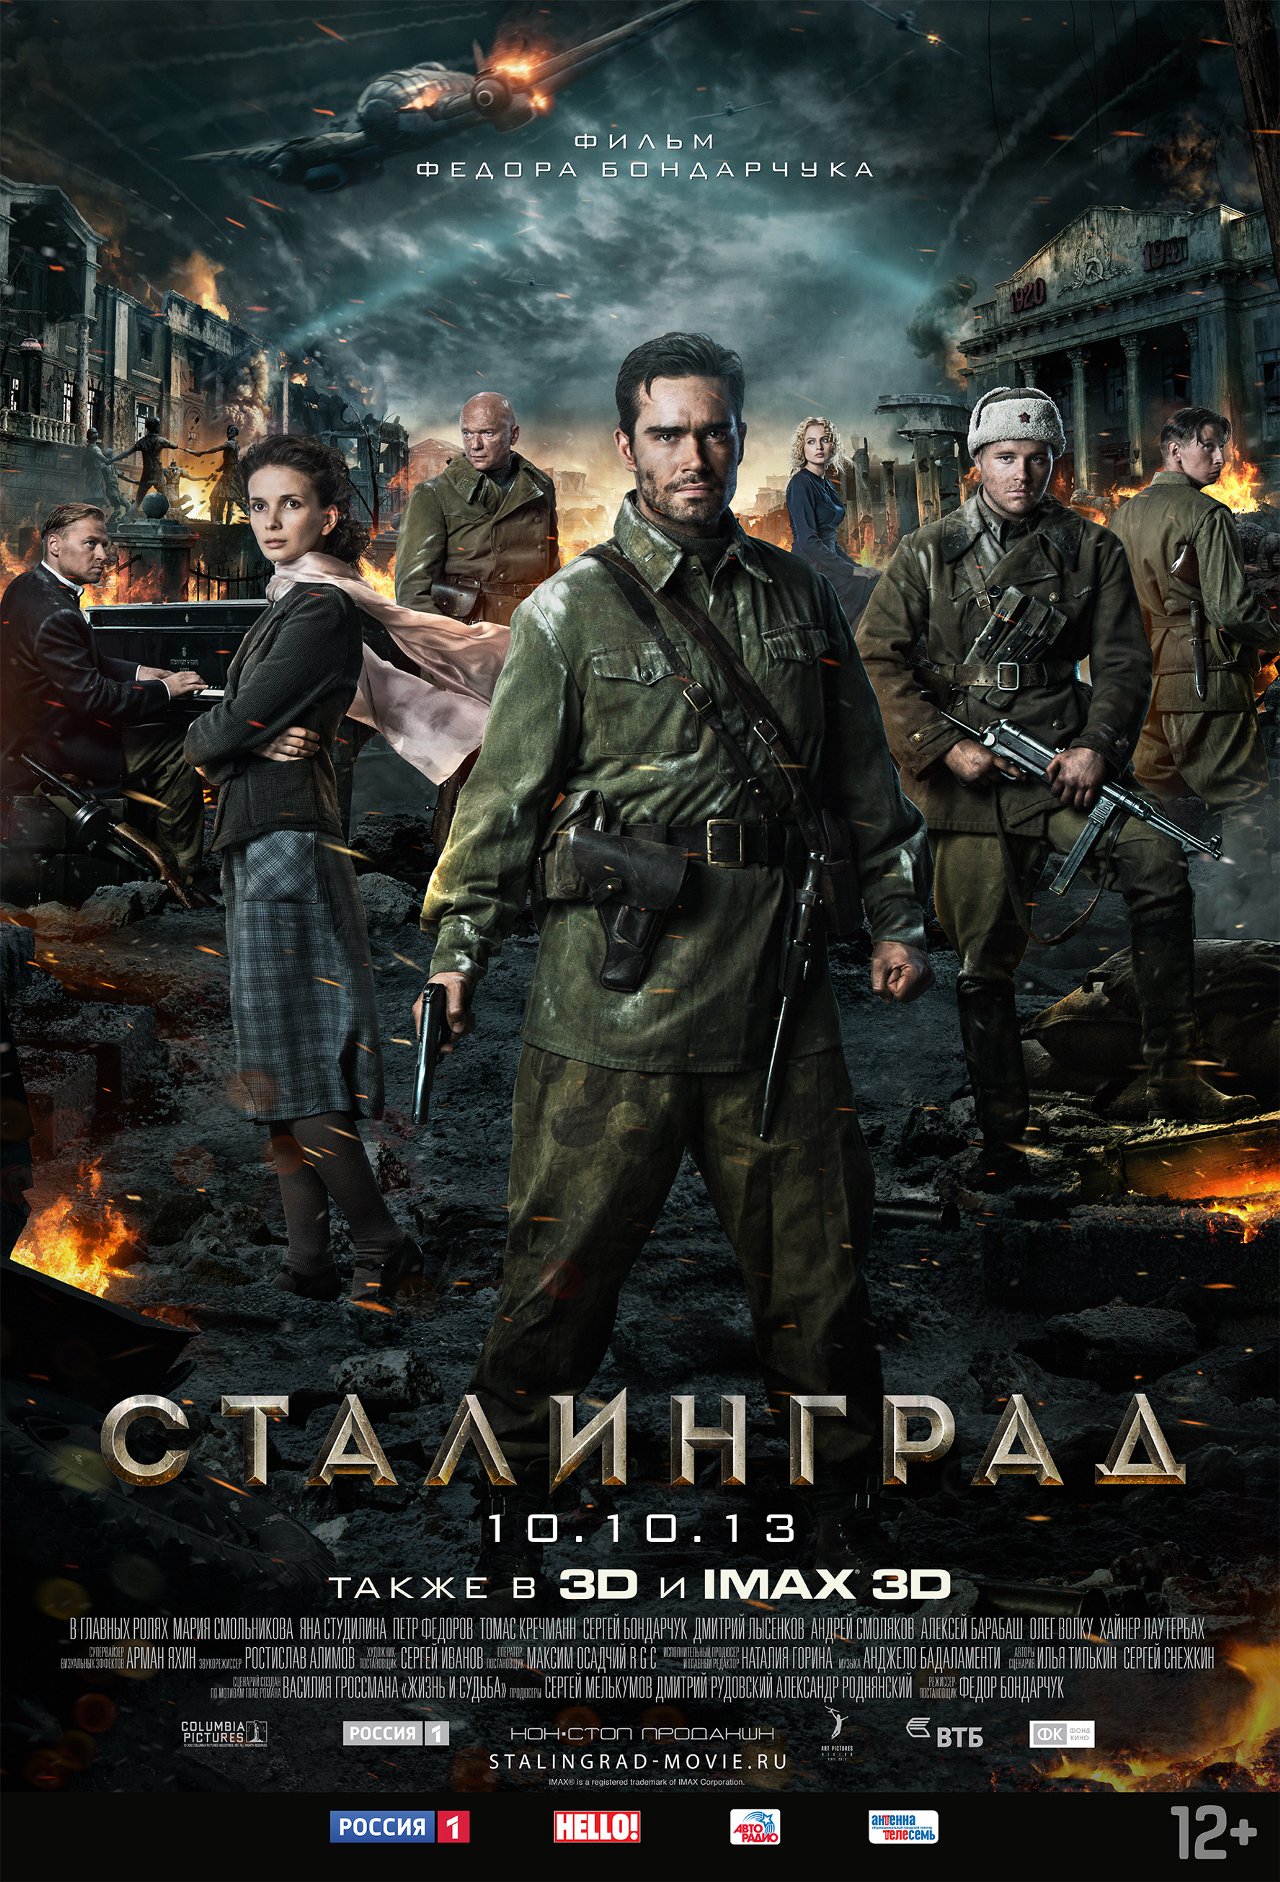 Сталинград (2013) – Фильм Про